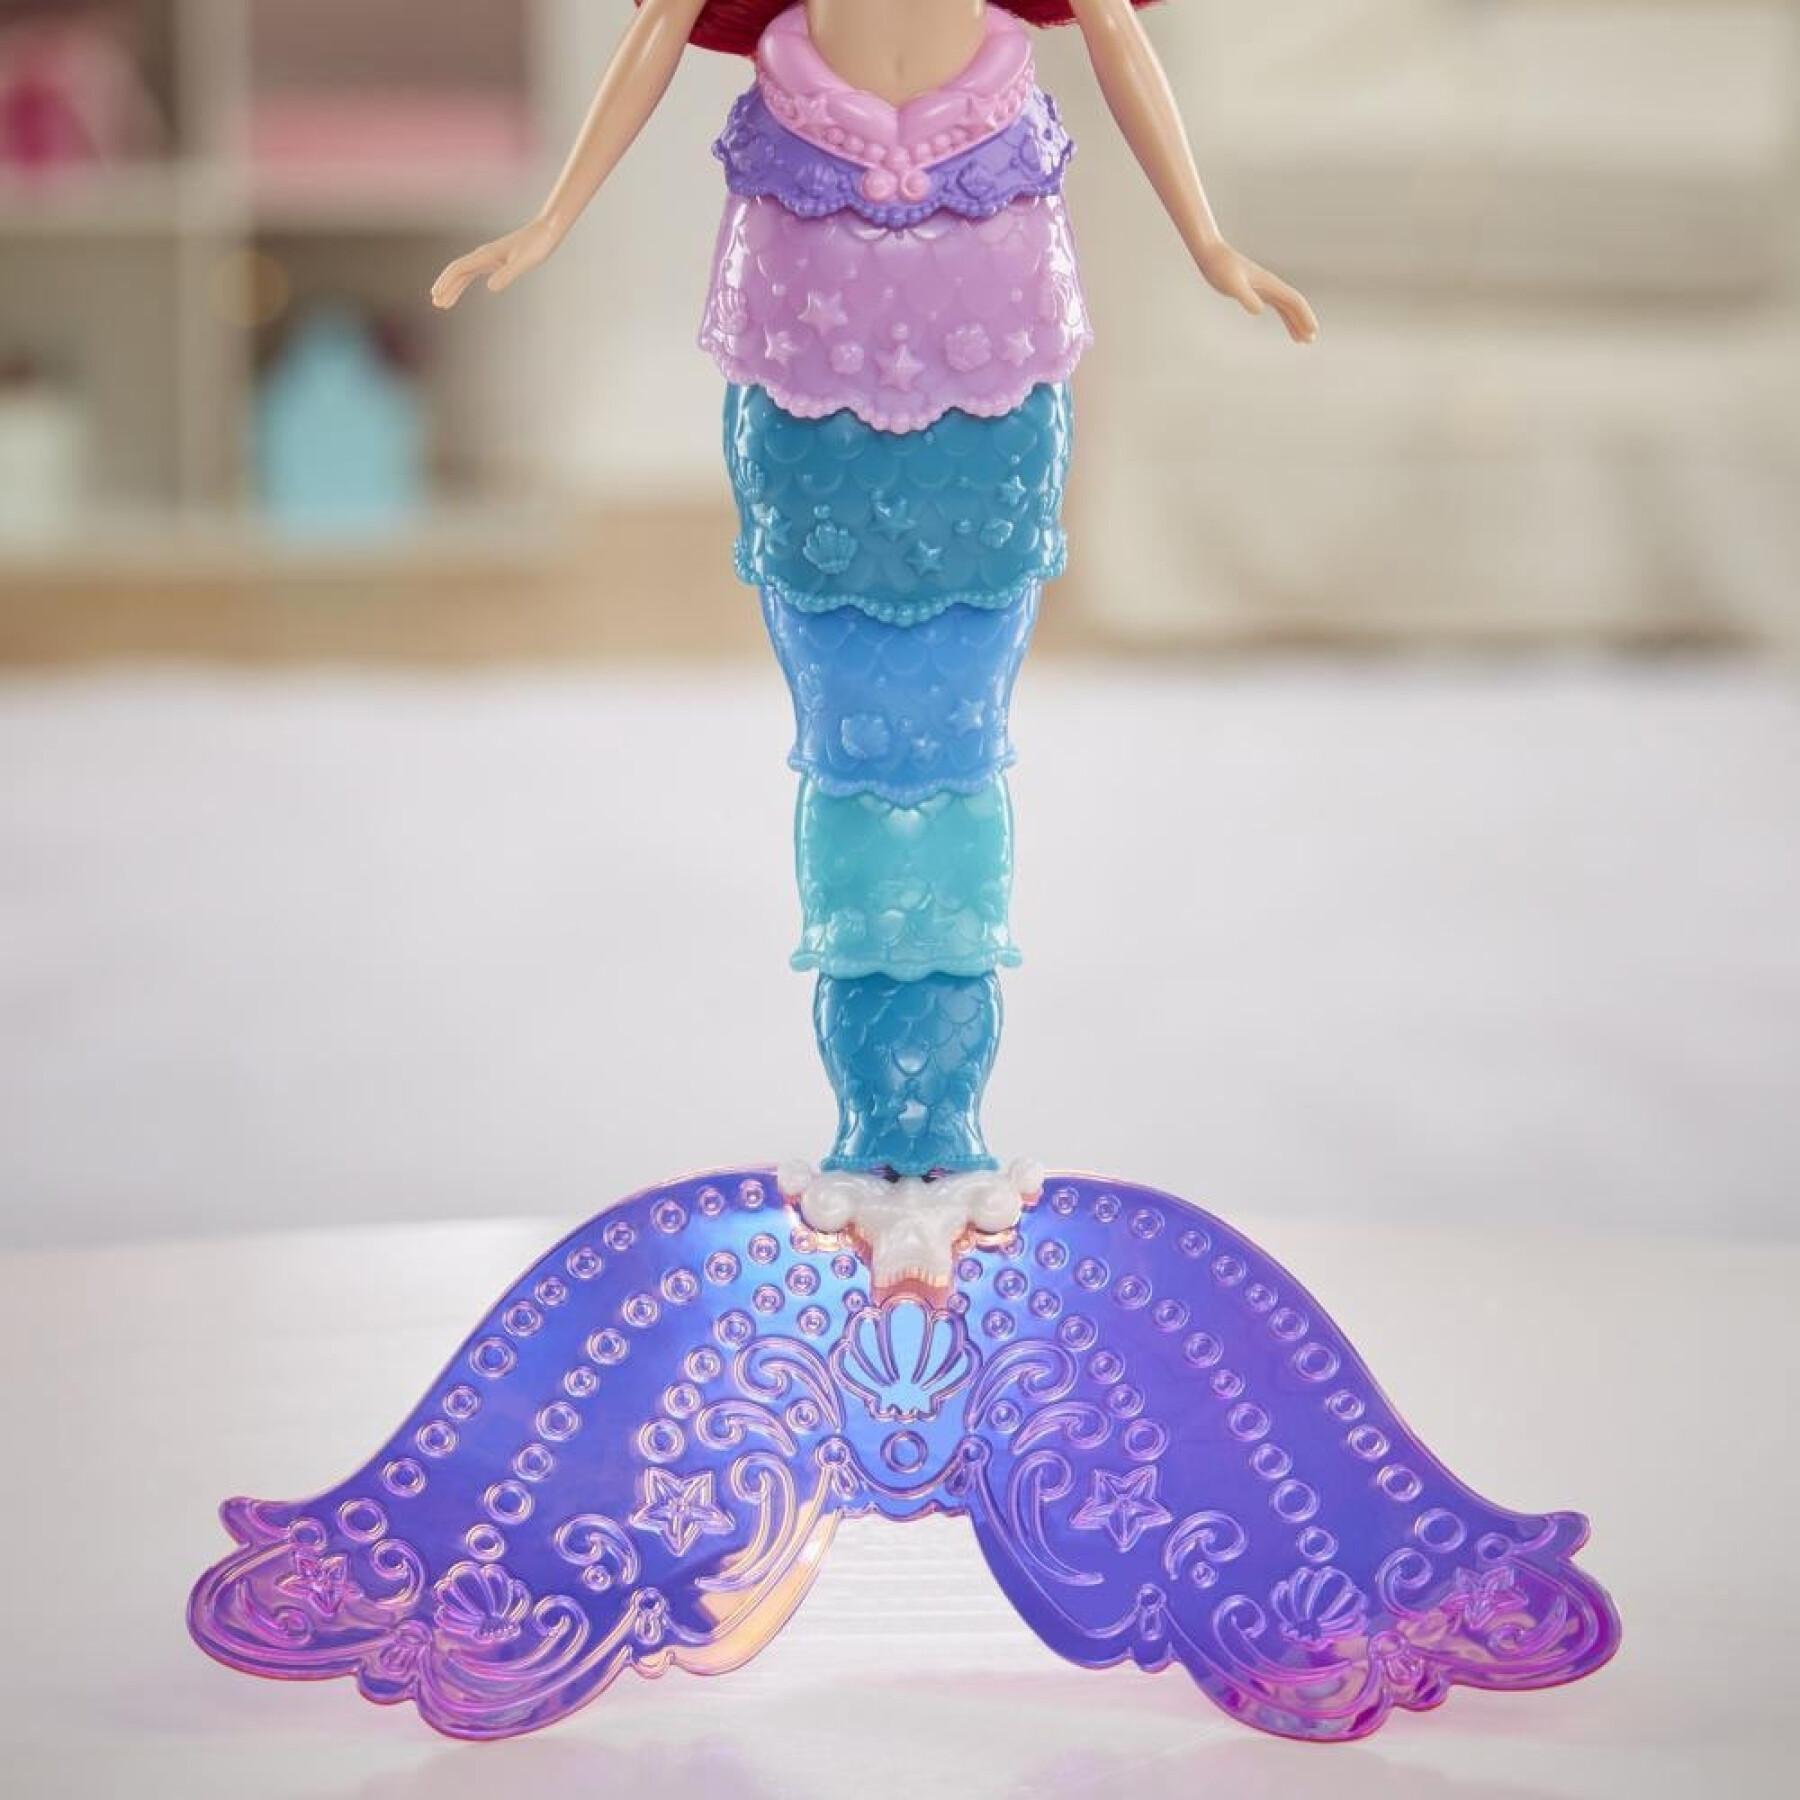 Ariel doll with rainbow tail Disney Princess